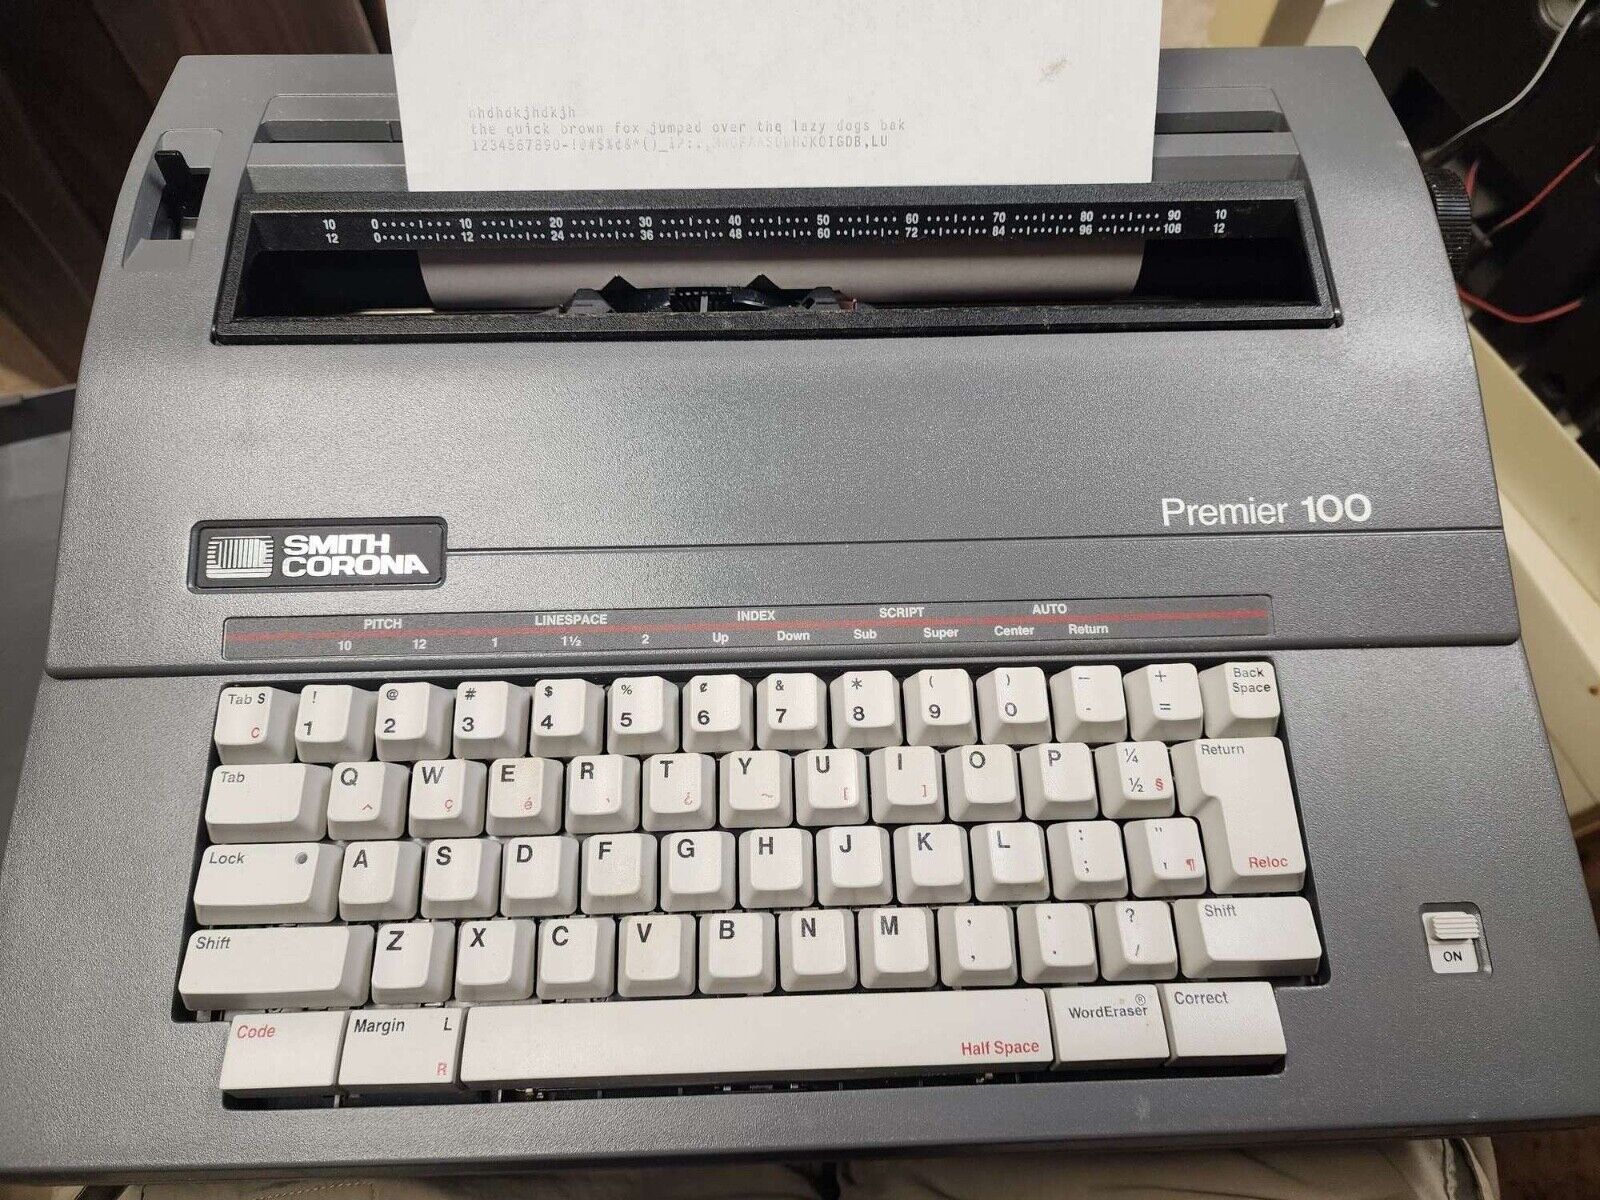 Smith Corona Premier 100 VINTAGE Electric Typewriter w/ COVER - Needs New Ribbon